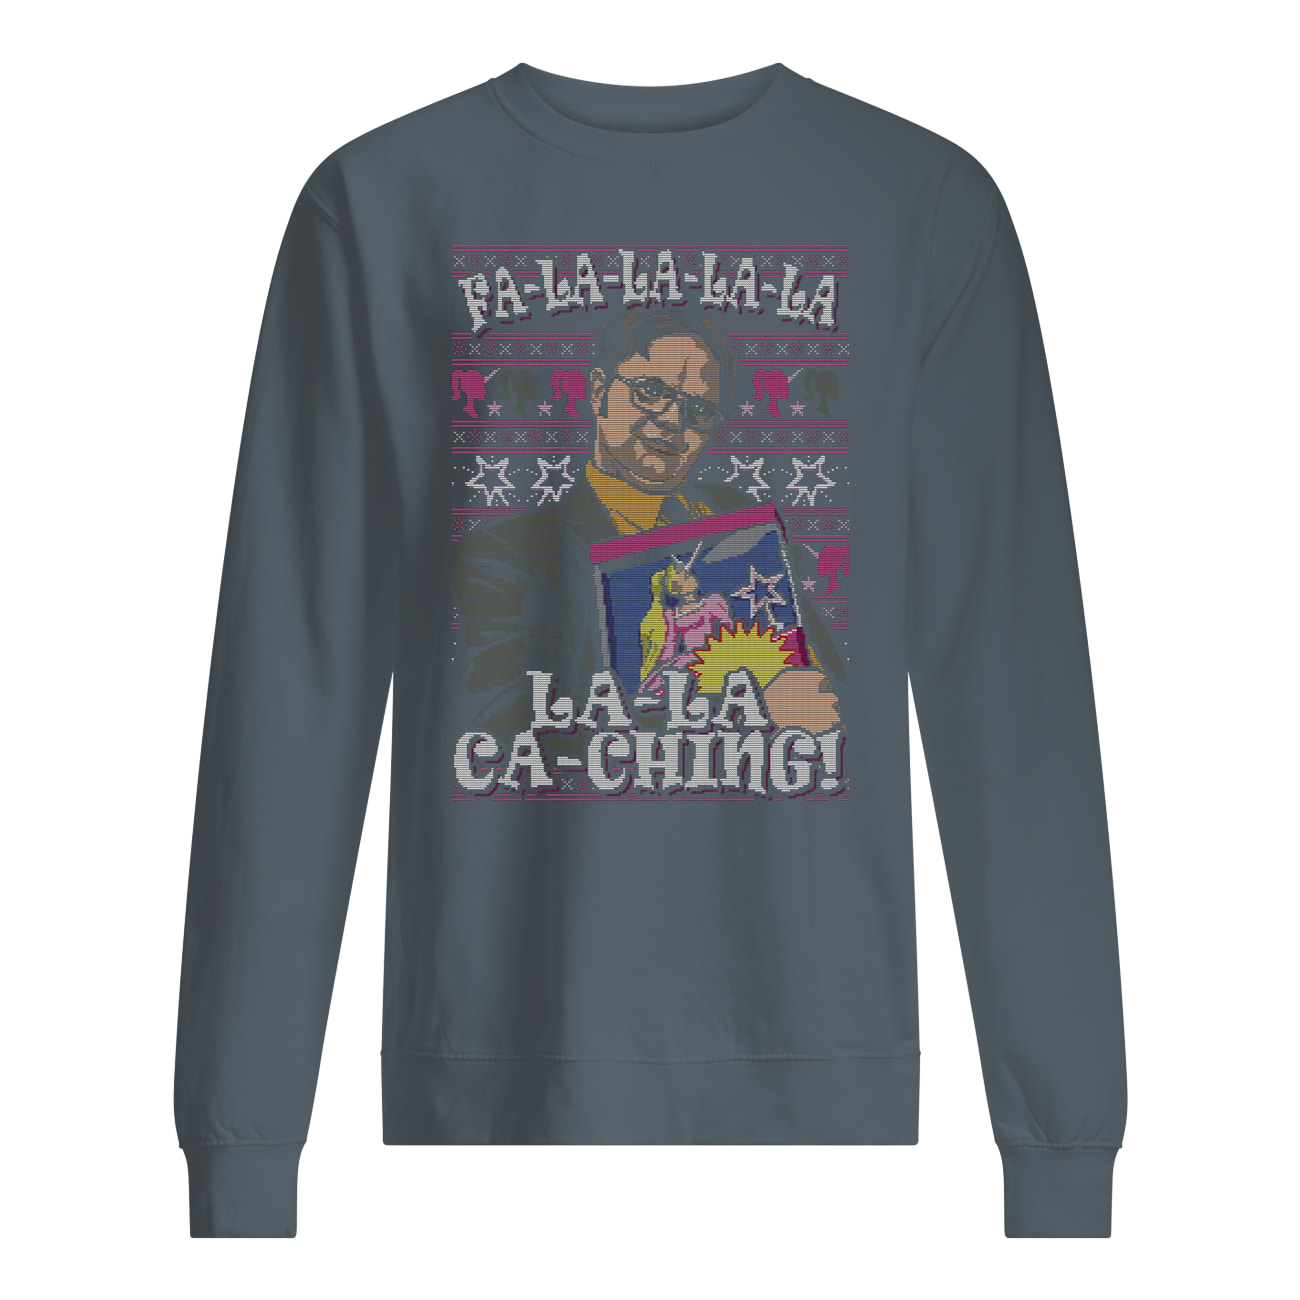 Dwight schrute fa la la ca ching ugly christmas sweatshirt